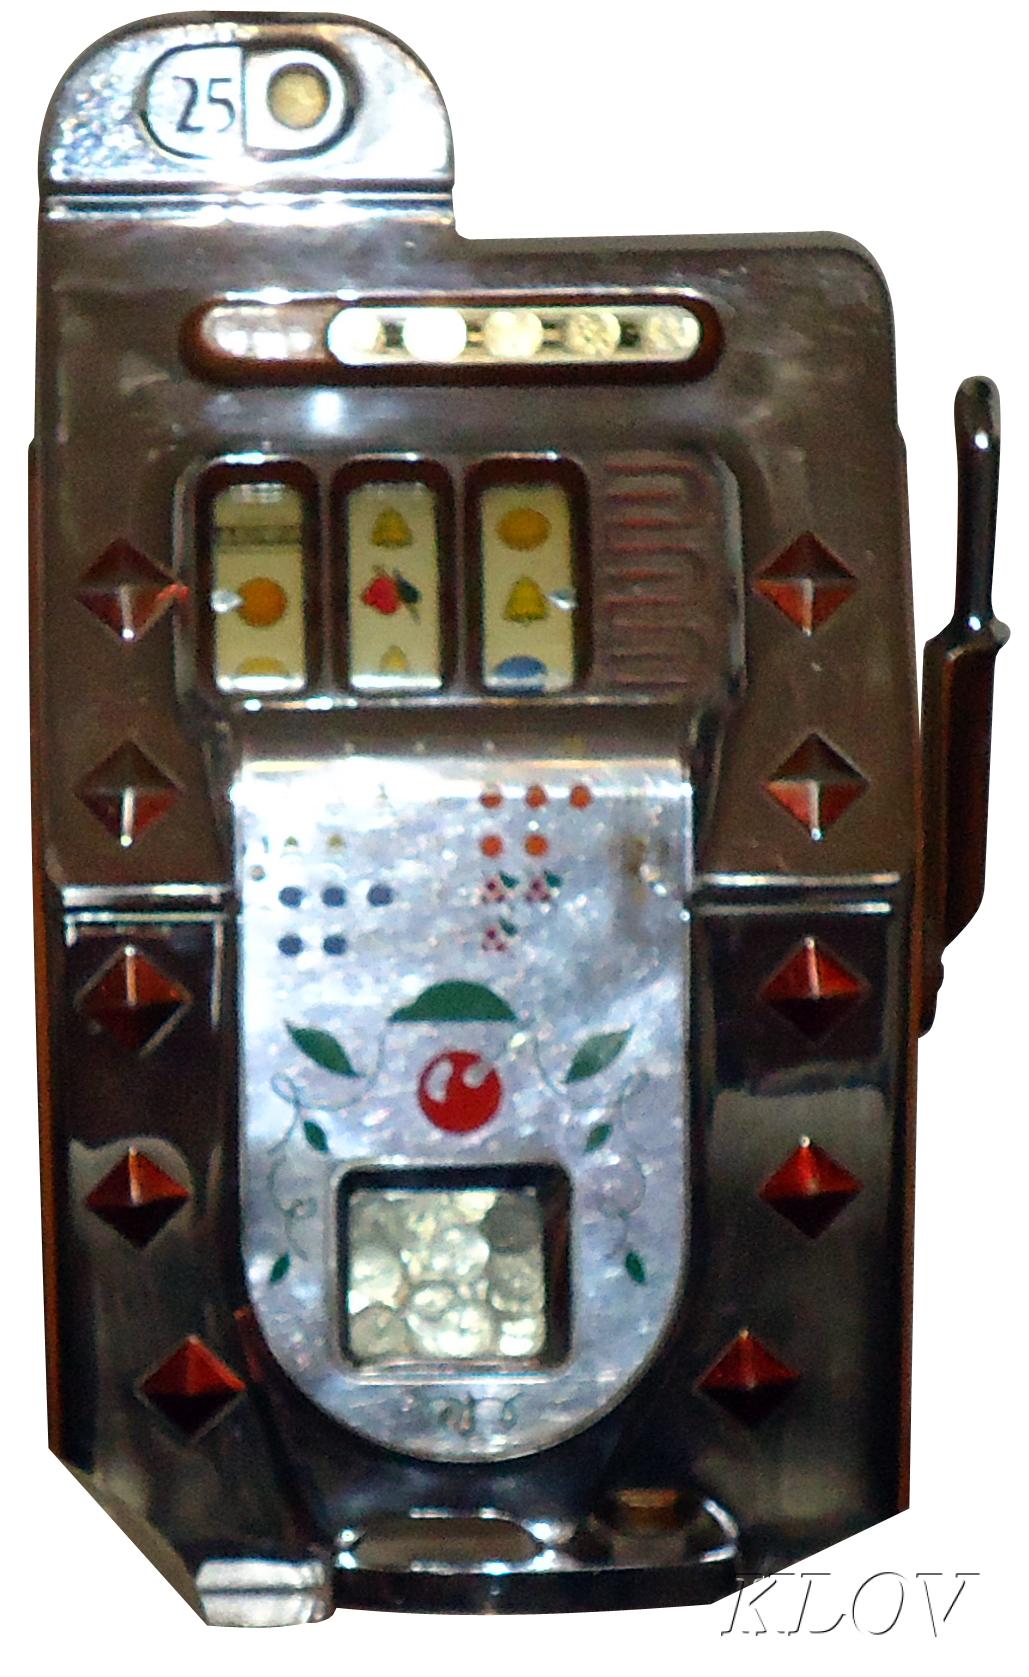 mills novelty company slot machine bell fruit